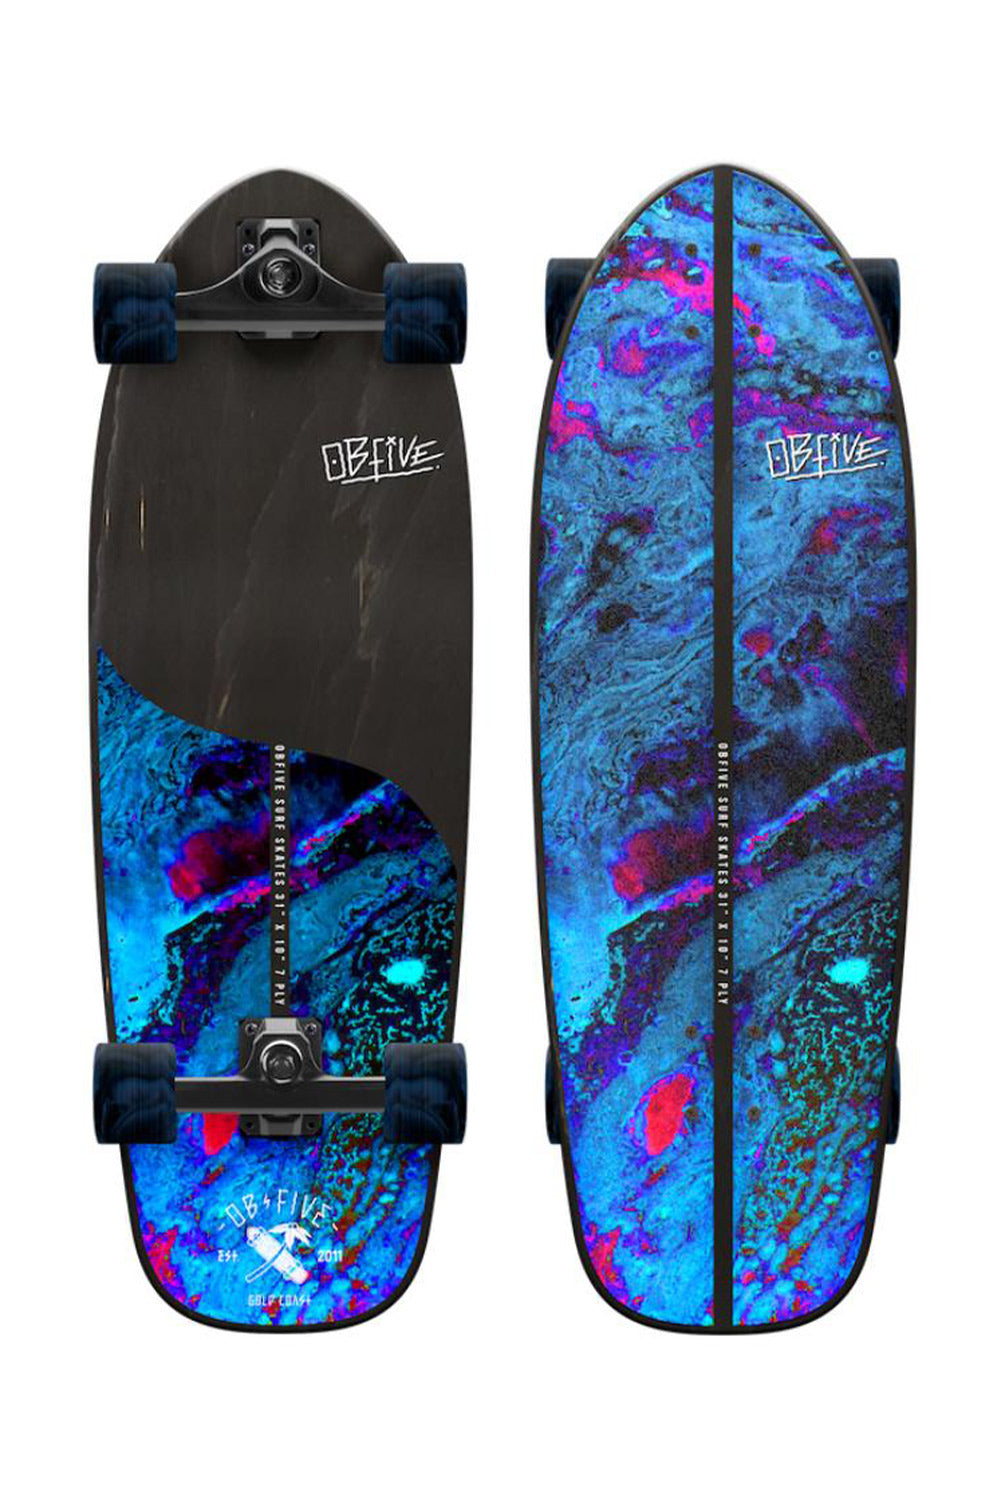 OBfive Plasma Surf Skate 31"